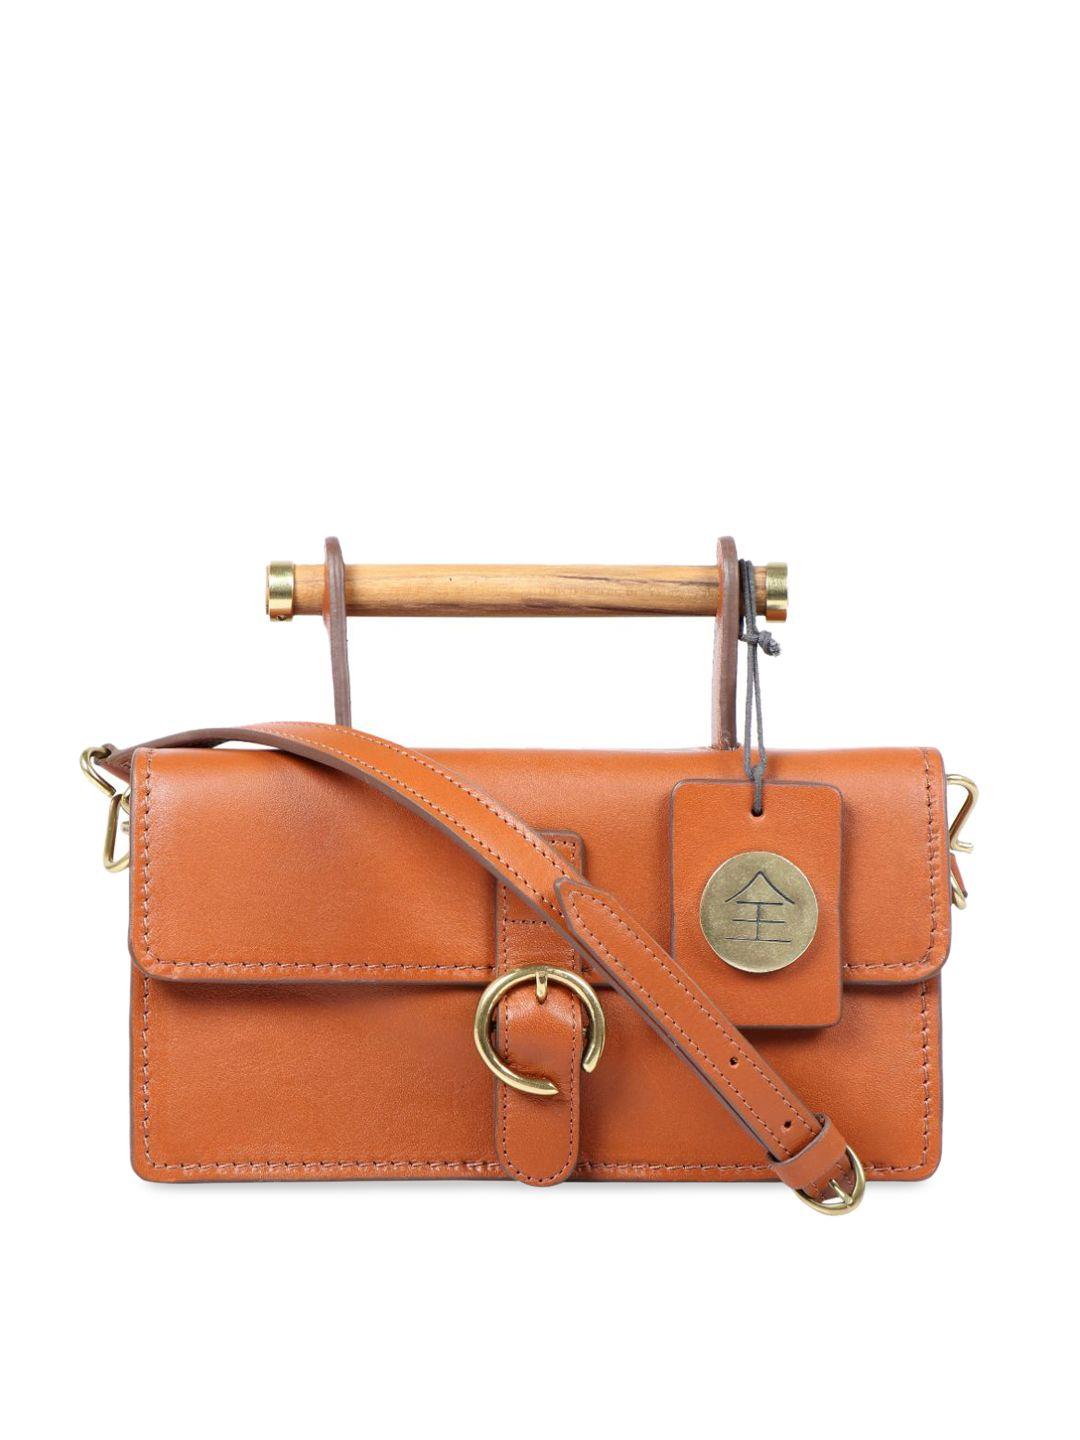 hidesign orange leather structured satchel